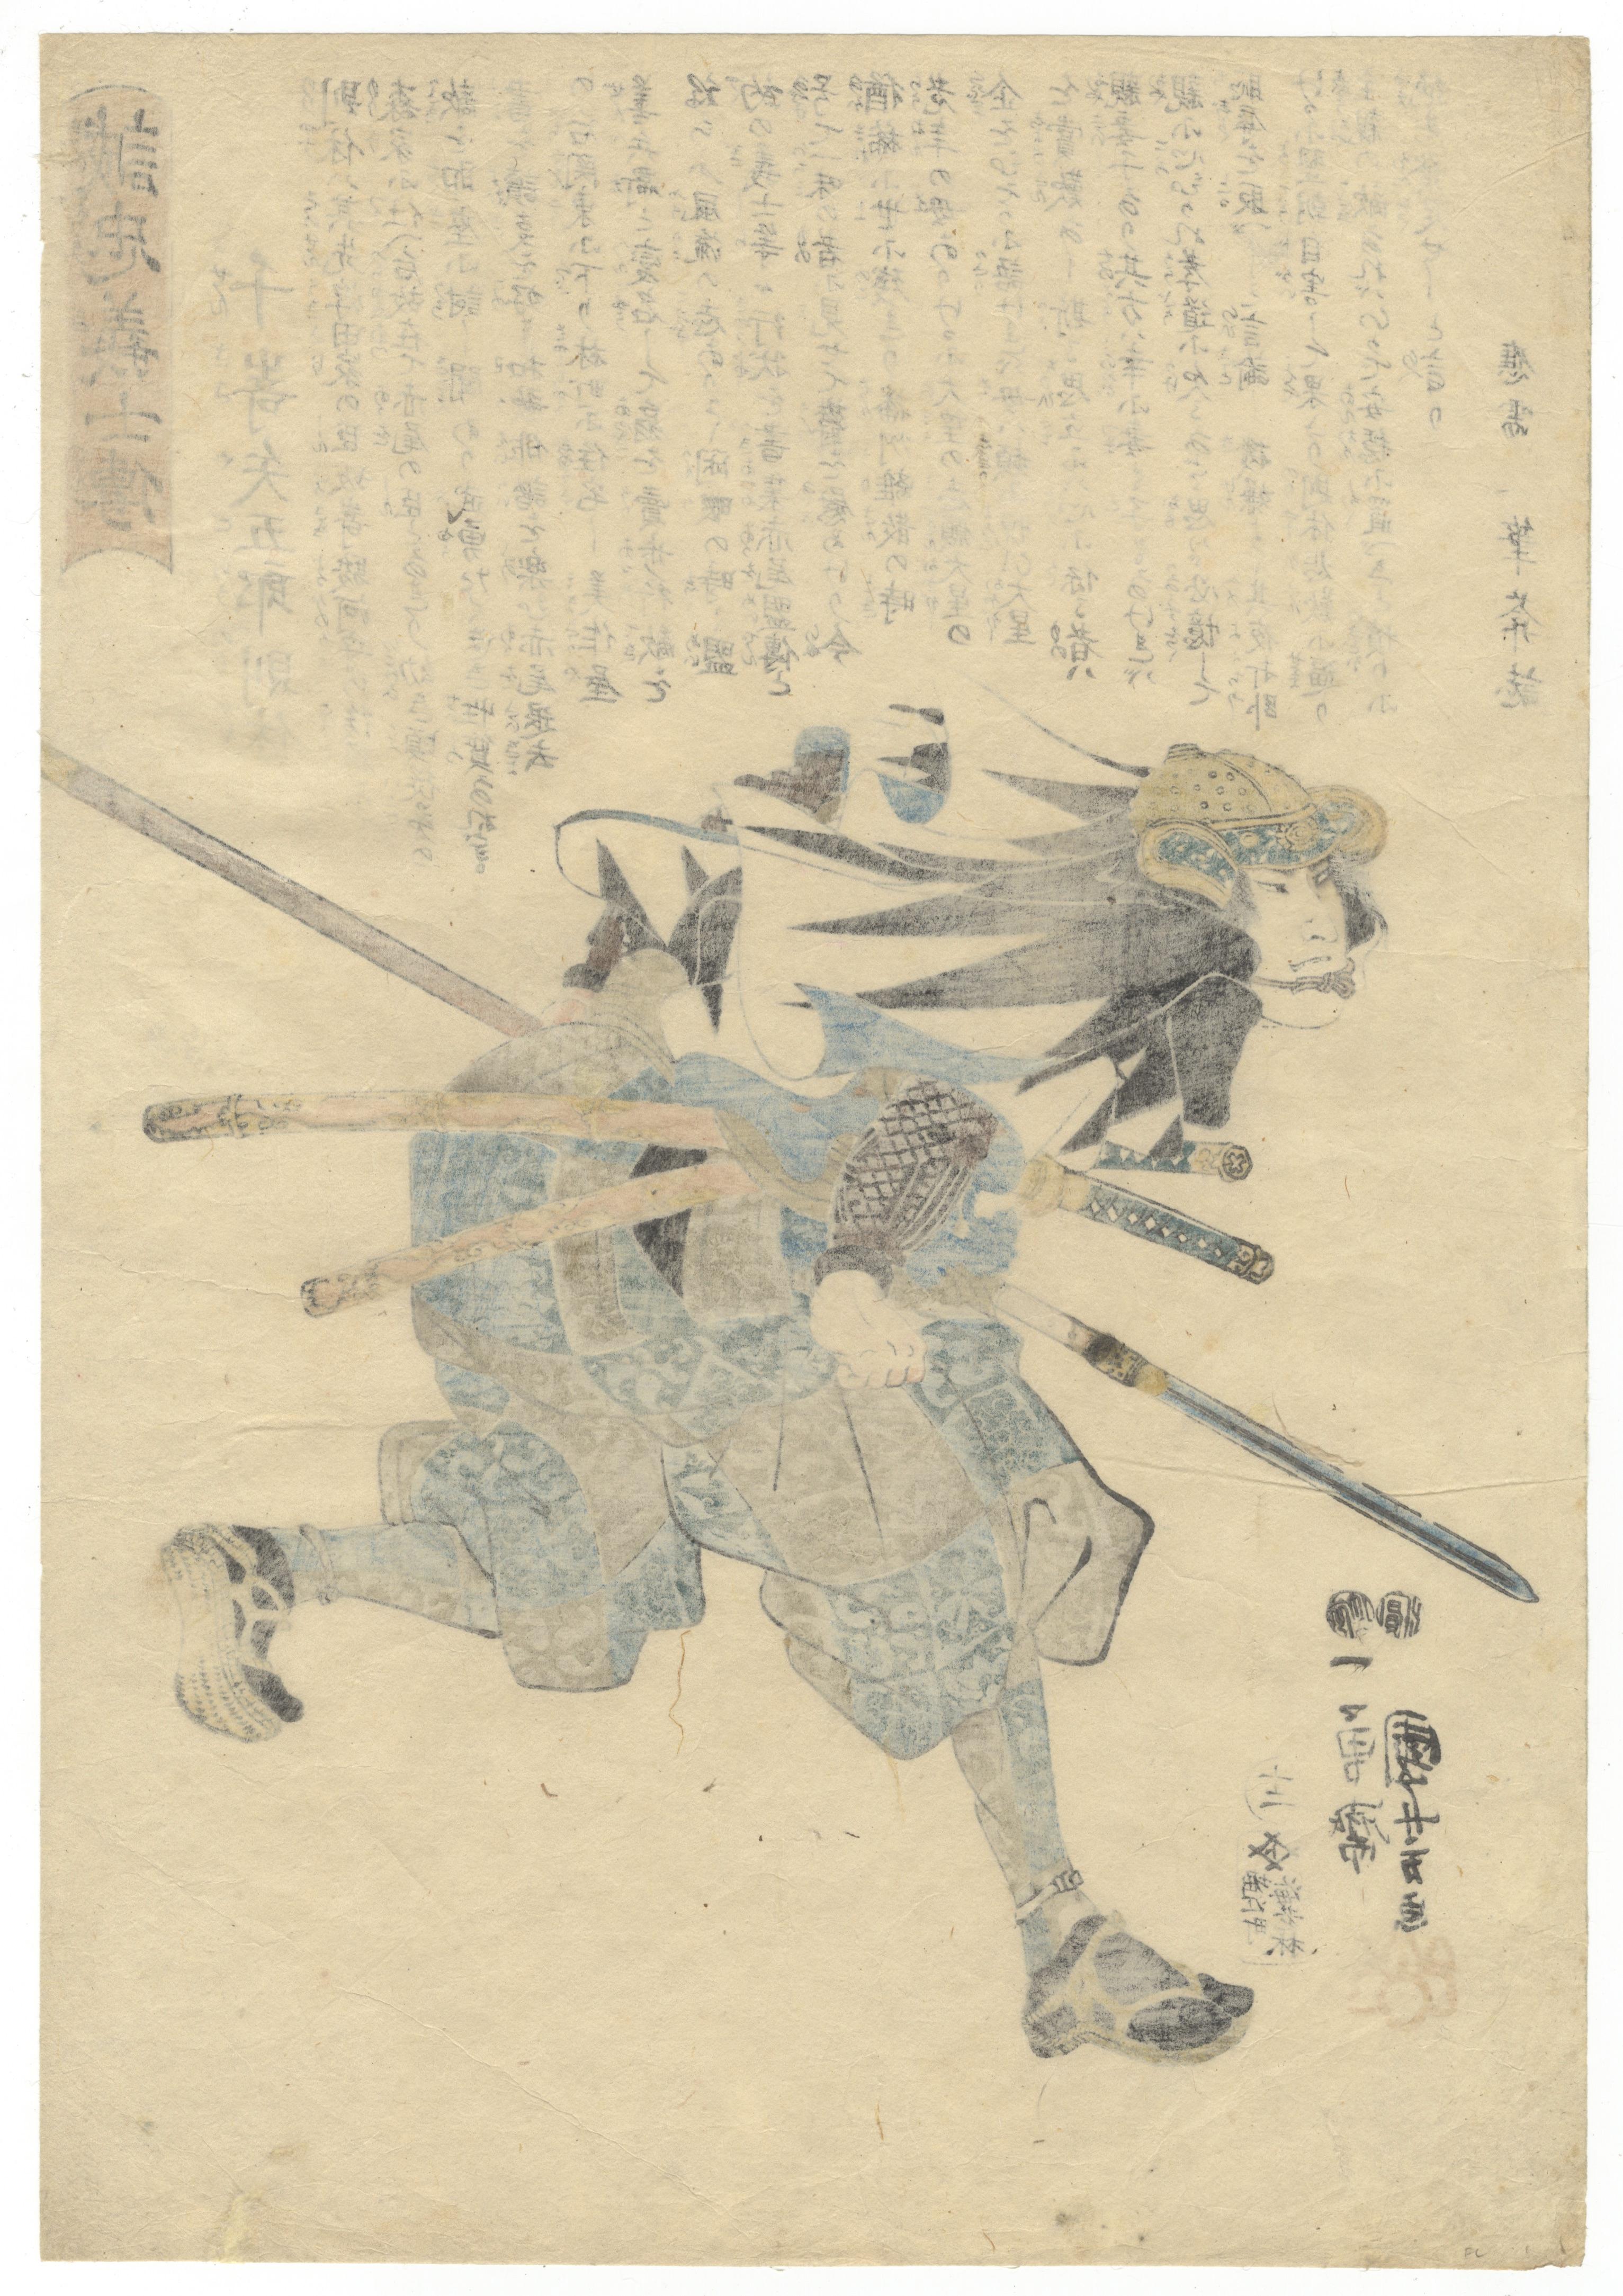 Artist: Kuniyoshi Utagawa (1798-1861)
Title: 12. Senzaki Yagoro Noriyasu
Series: Stories of the True Loyalty of the Faithful Samurai 
Publisher: Ebiya Rinnosuke
Date: 1847-1848
Dimensions: 35.7 x 24.9 cm
Condition: Some restored holes, light